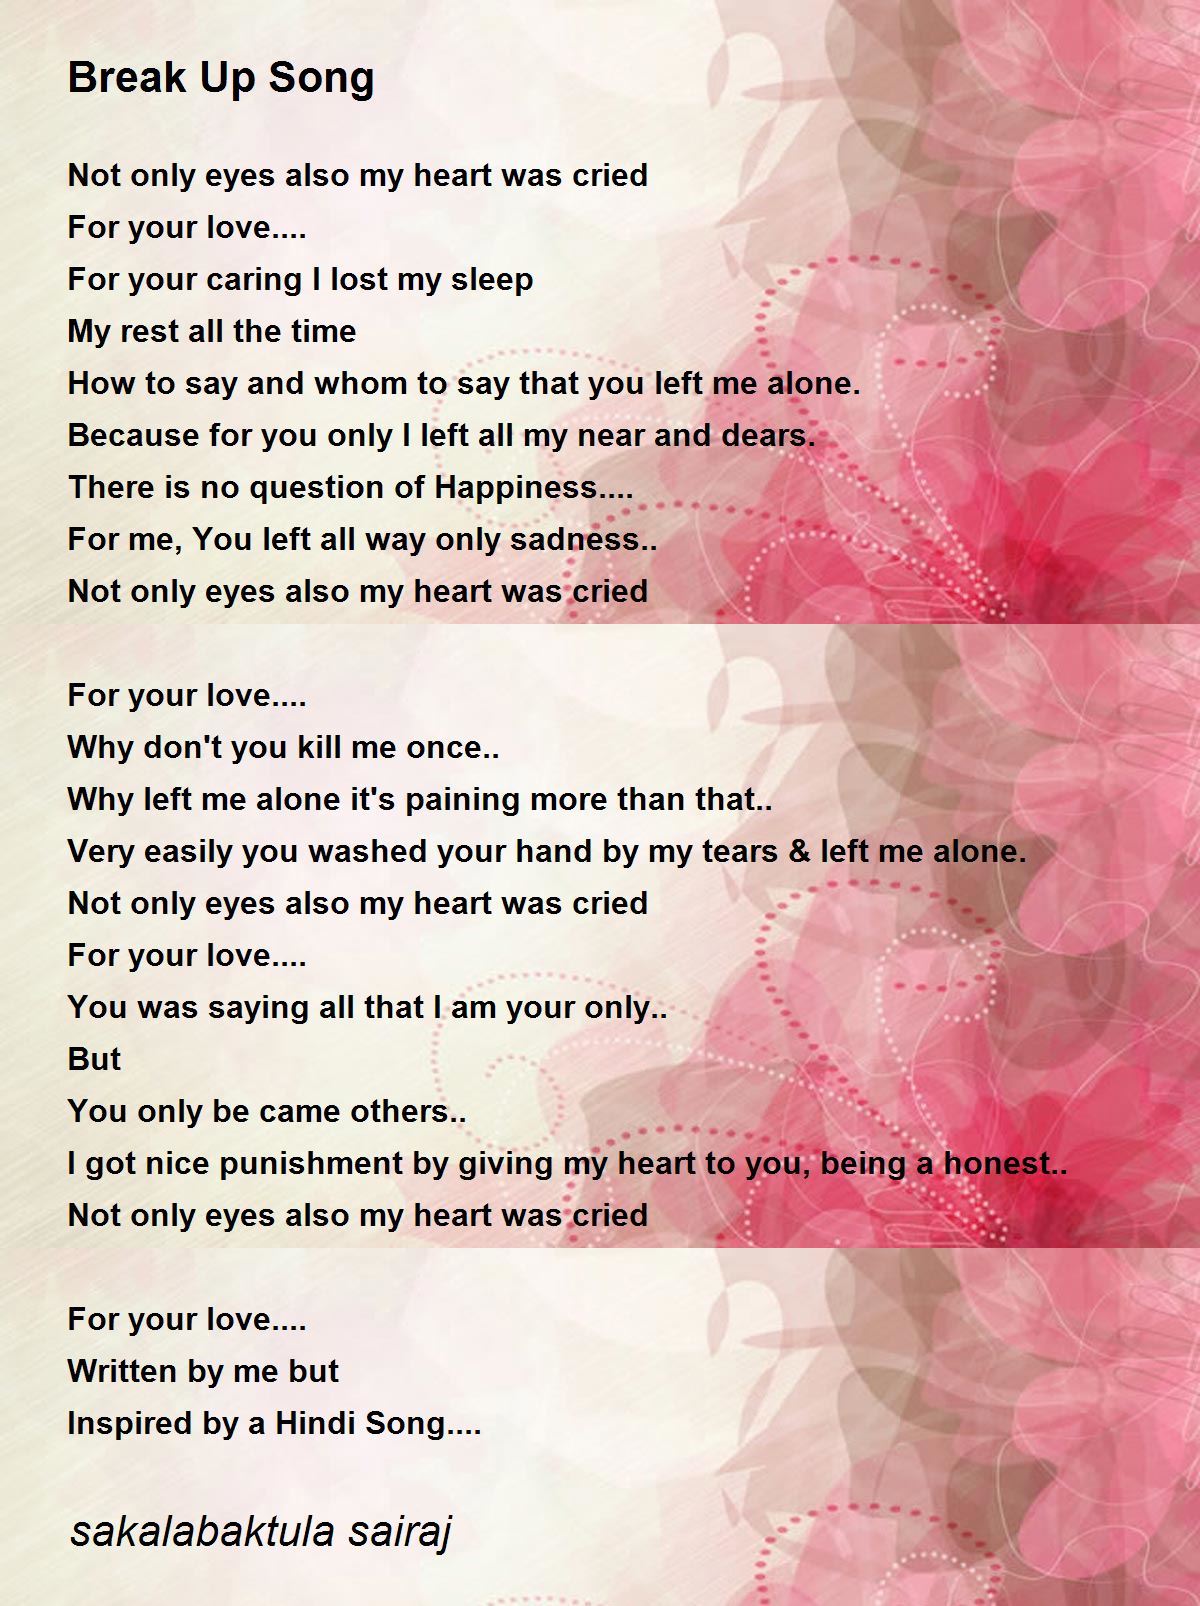 Break Up Song - Break Up Song Poem by sakalabaktula sairaj